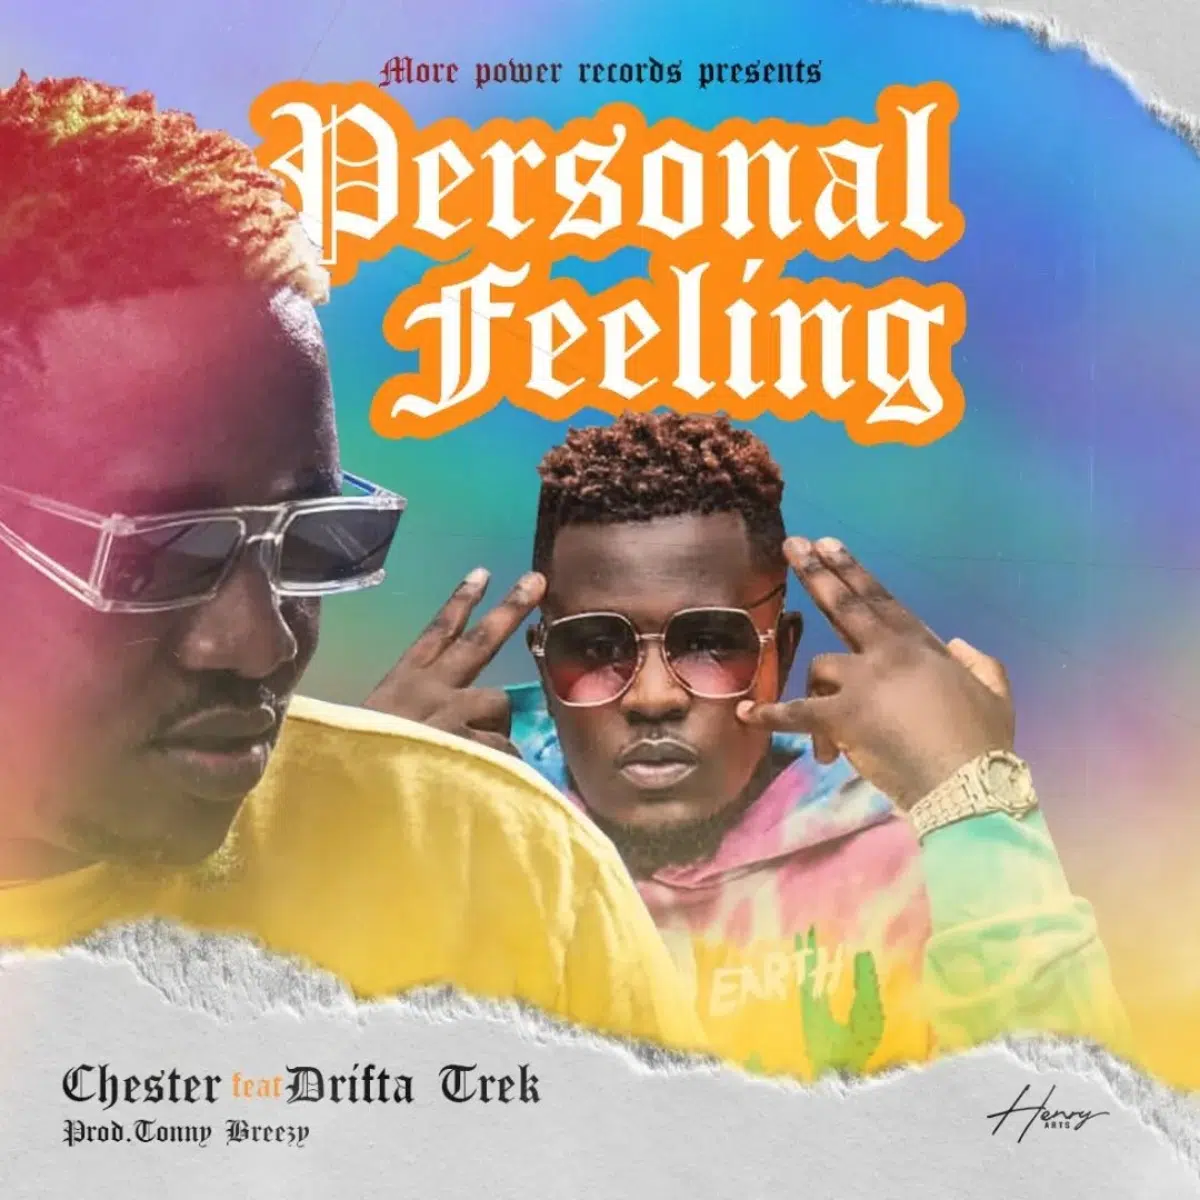 DOWNLOAD: Chester Feat Drifta Trek – “Person Feeling” Mp3